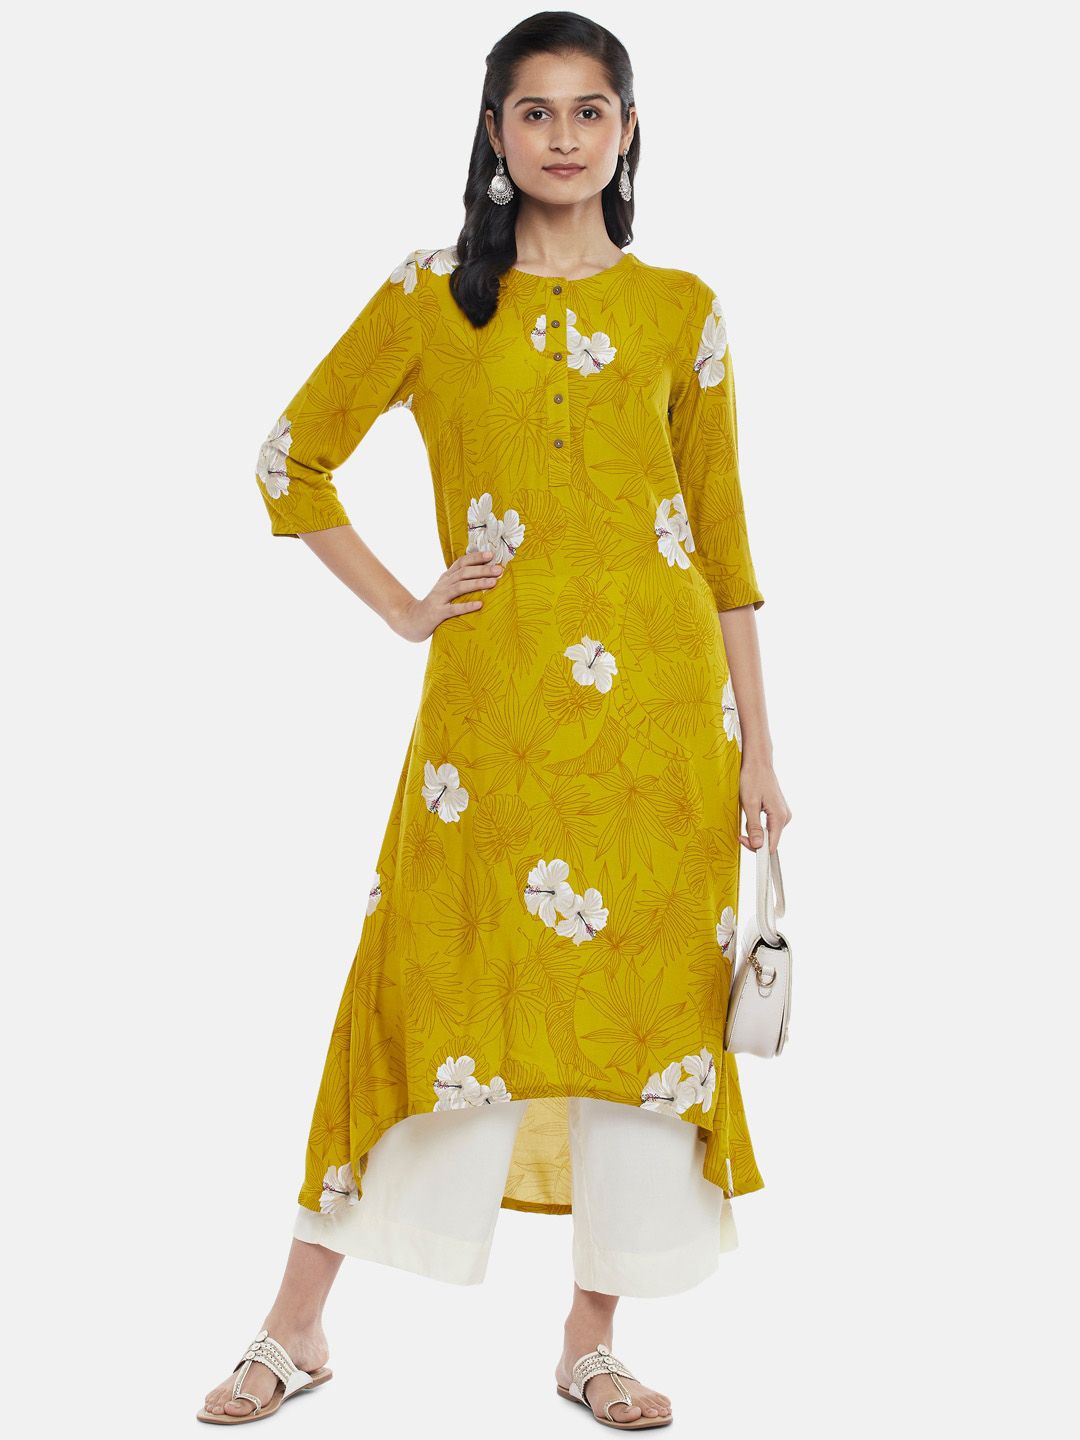 RANGMANCH BY PANTALOONS Women Mustard Yellow Floral Printed Floral High Low Kurta Price in India